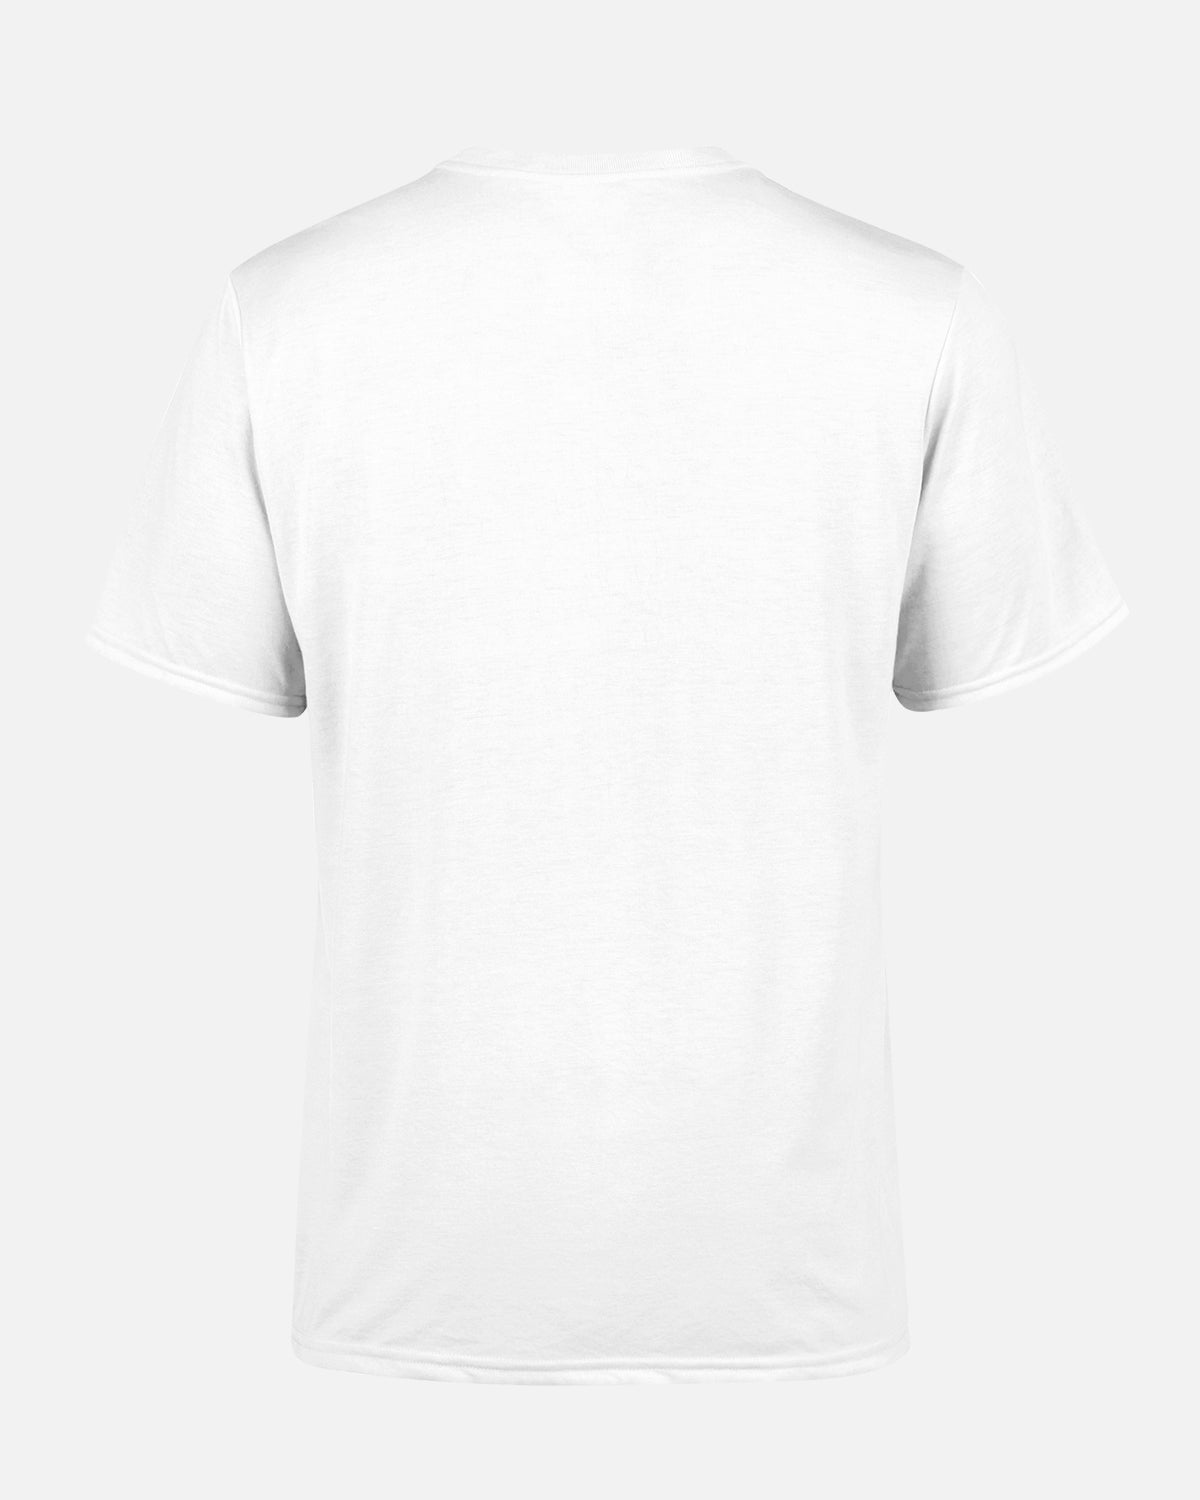 NFFC White Block Photo Print T-Shirt